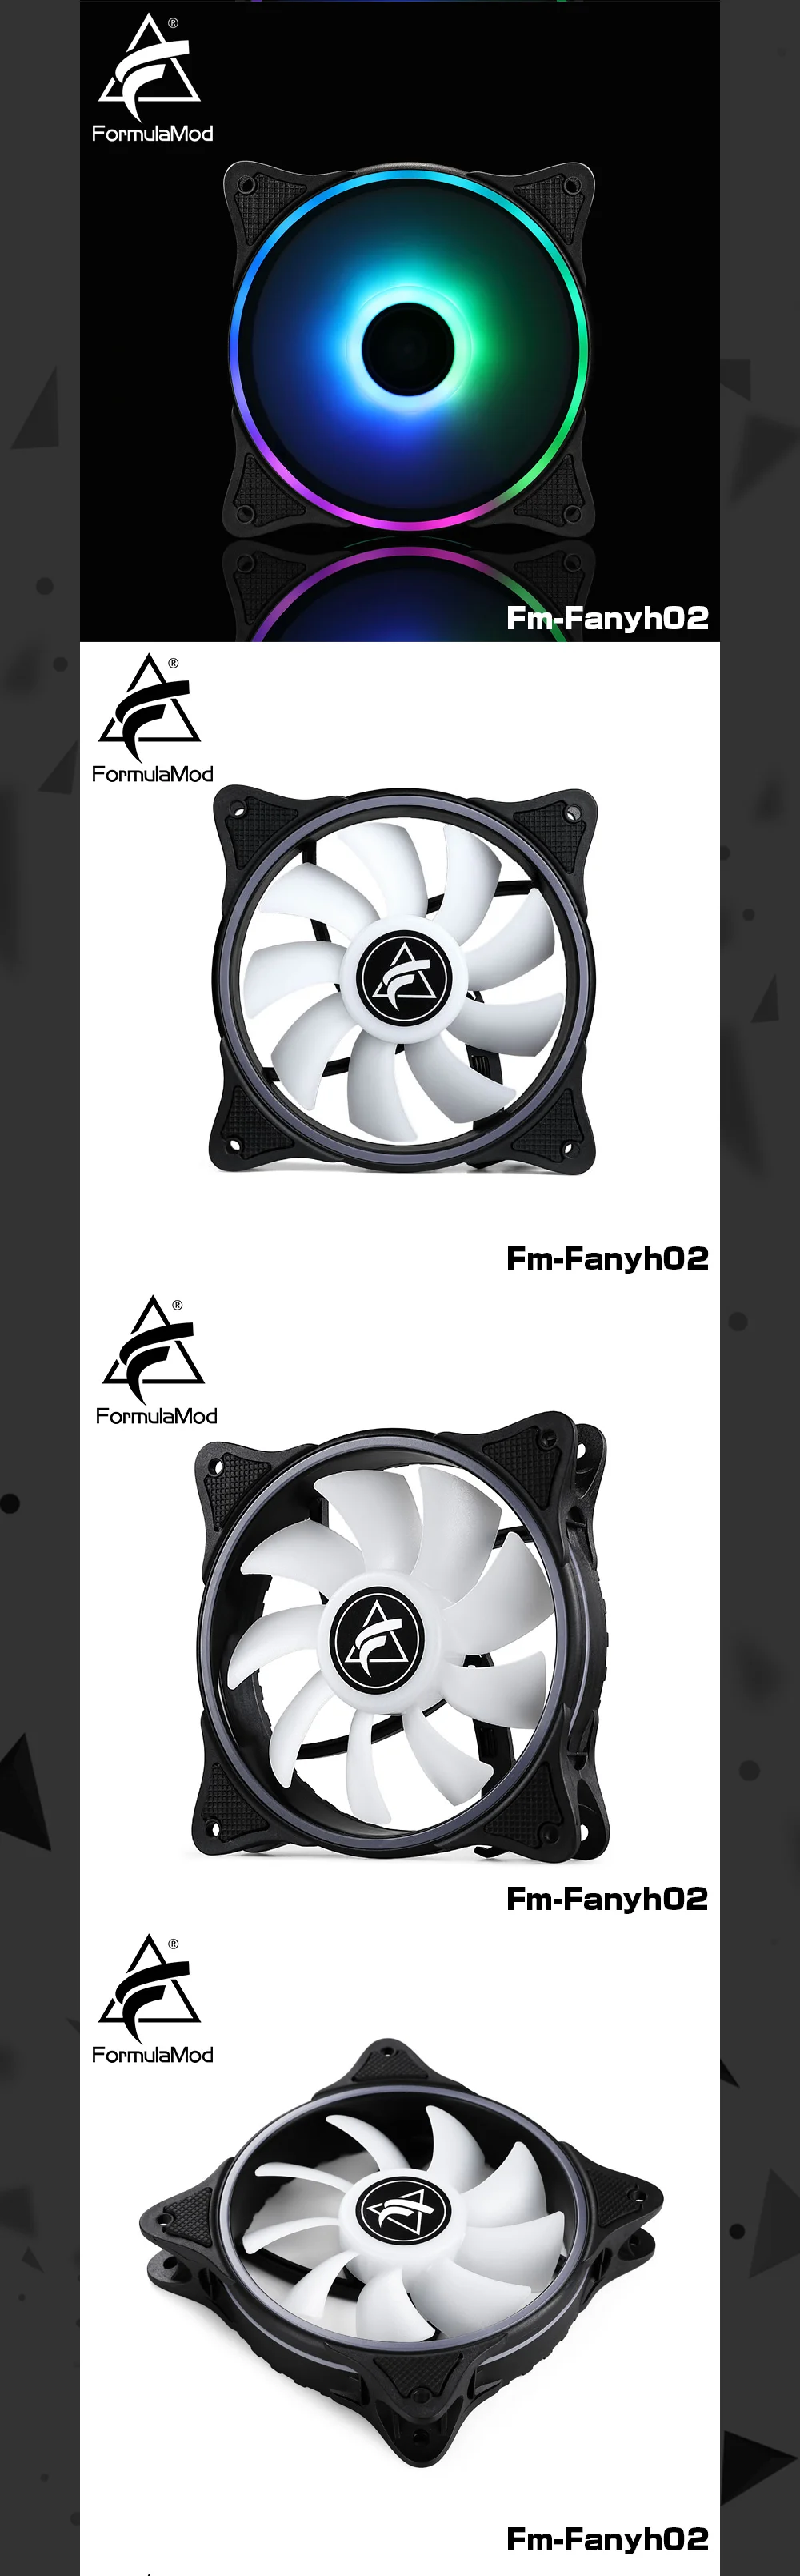 FormulaMod Fm-Fanyh02 120 мм PWM Fan 5v 3Pin RGB многоцелевой радиатор гидравлический подшипник 9 больших размеров лезвия